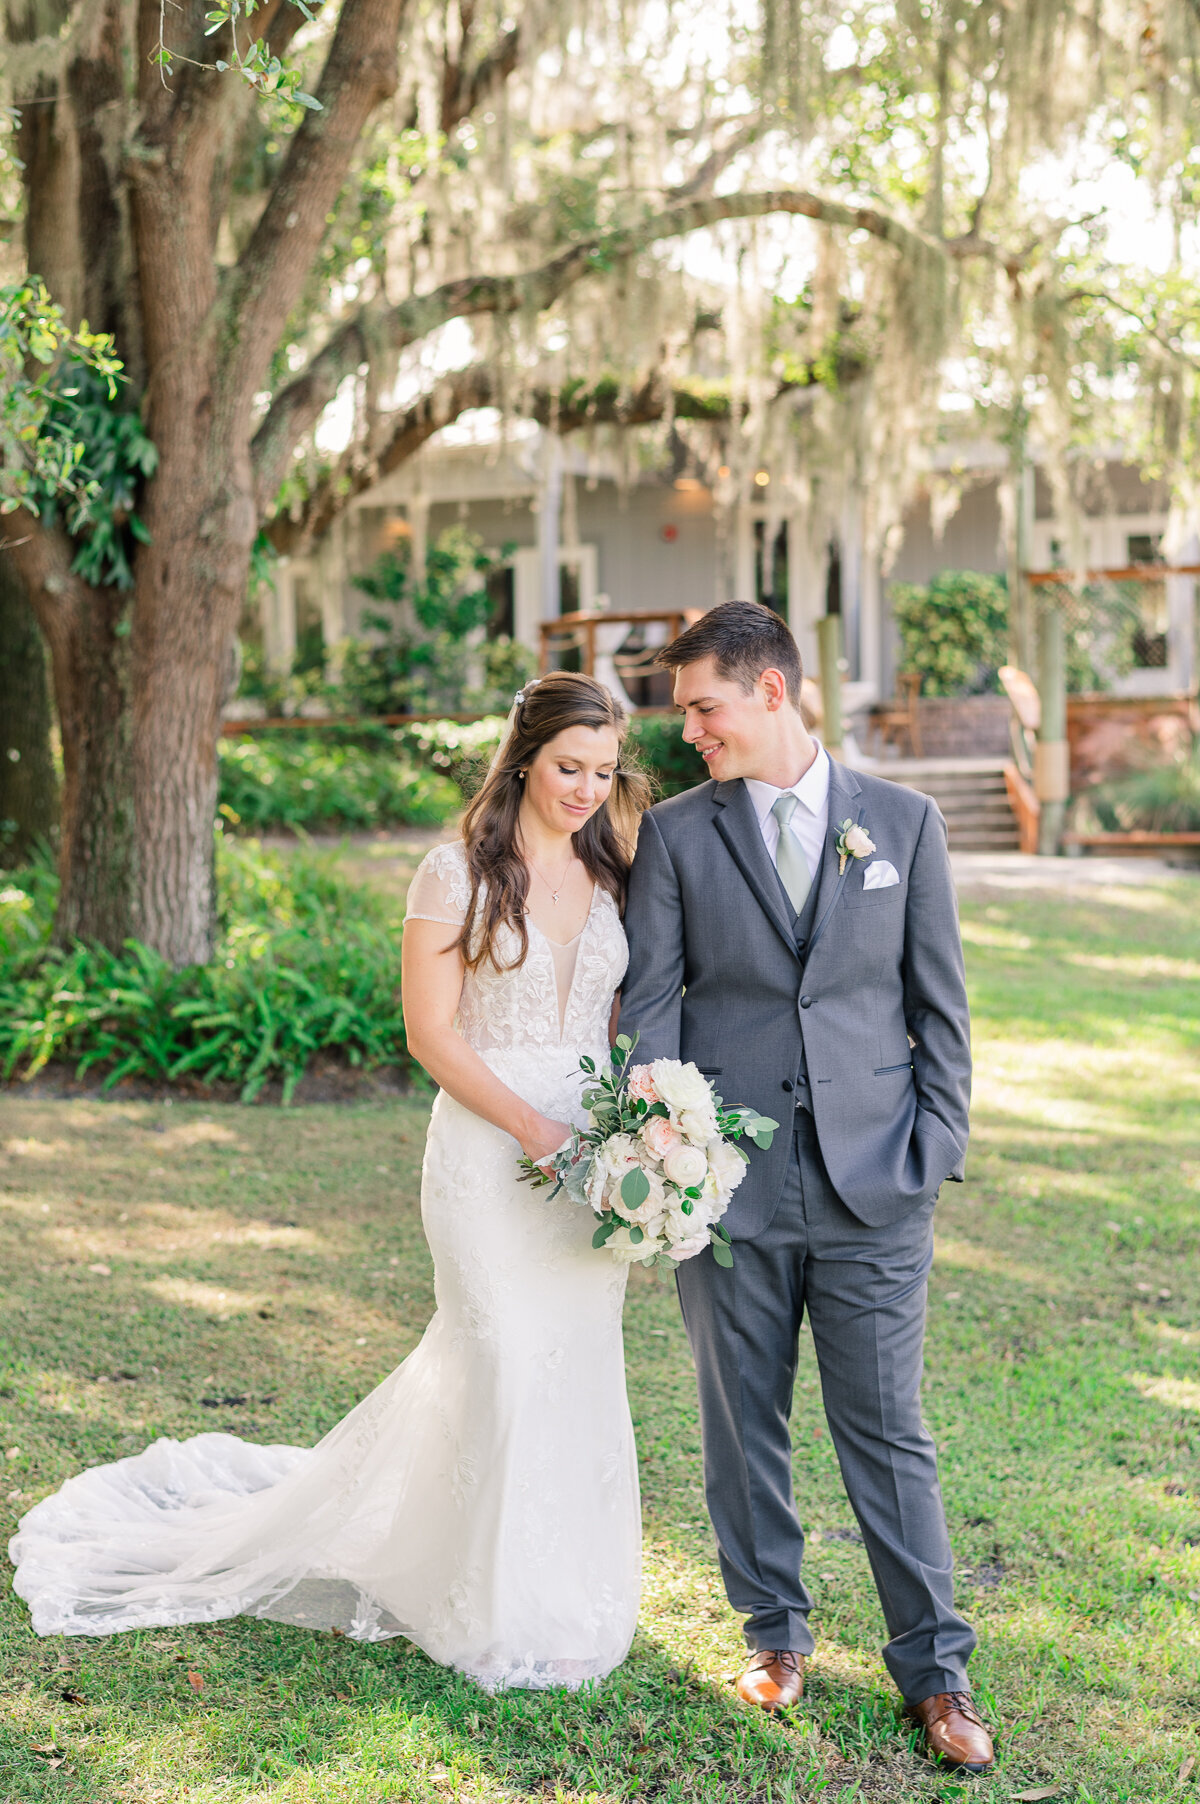 Caroline & Phillip Up the Creek Farms Wedding Portrait | Lisa Marshall Photography